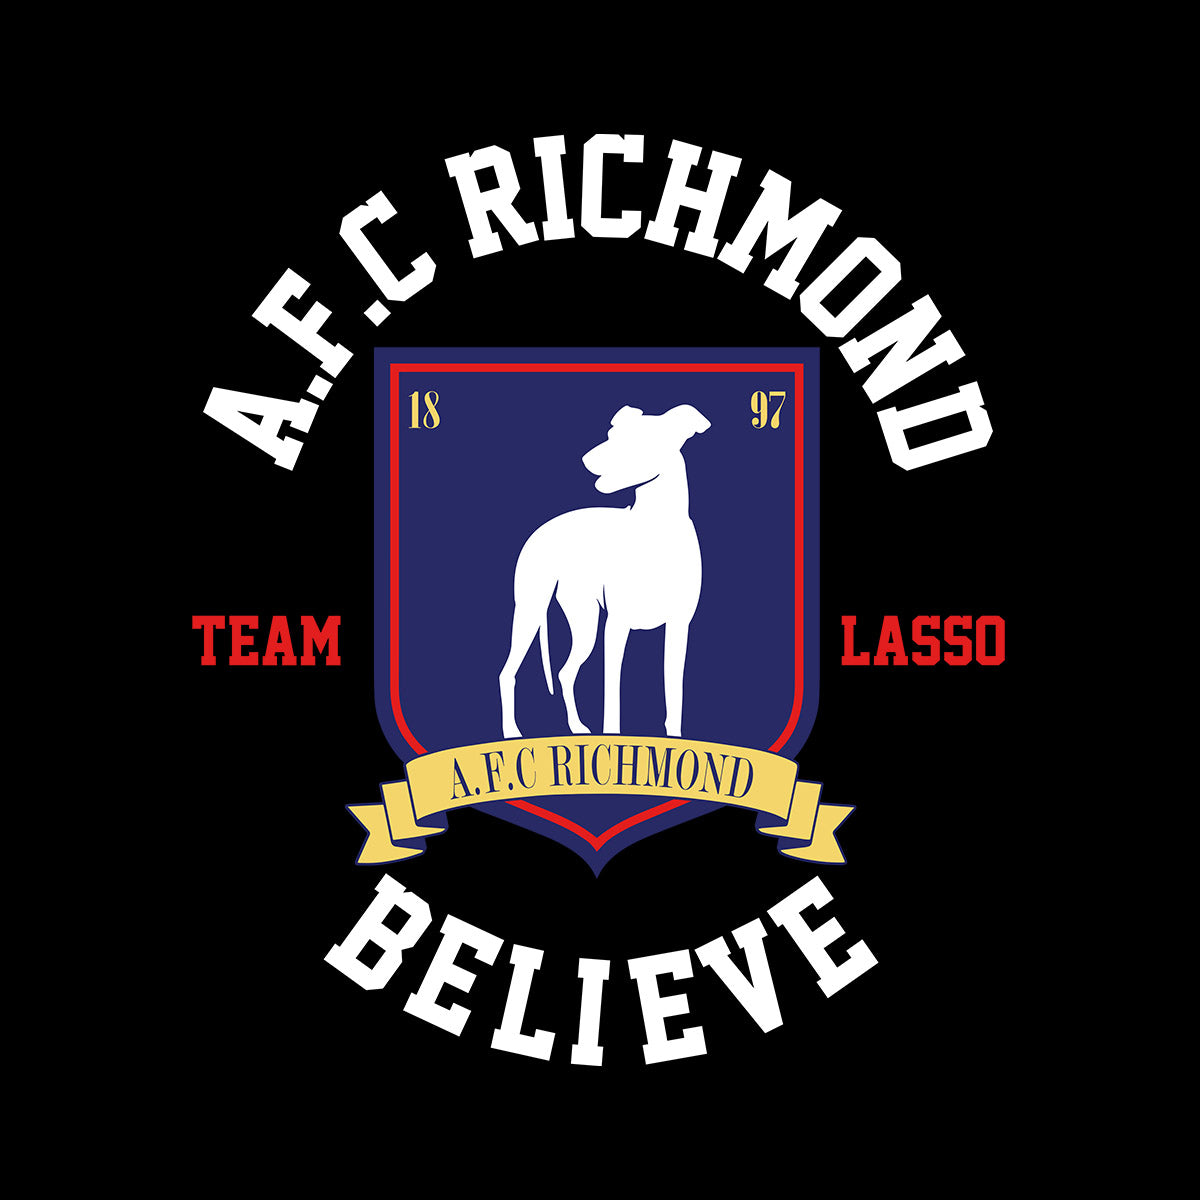 Ted Lasso AFC Richmond T-shirt Believe Gift For Movie Fan Team Lasso Kids T-shirt Black